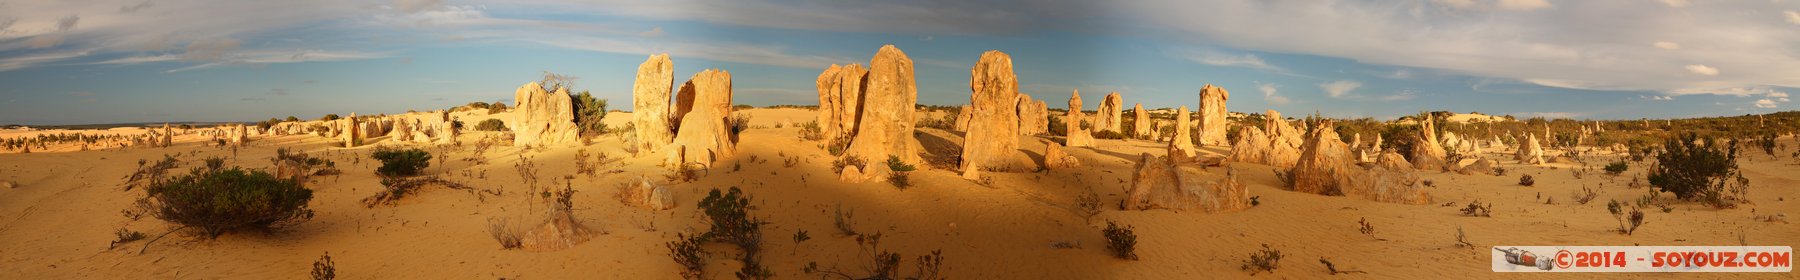 Nambung National Park  - The Pinnacles - Panorama
Stitched Panorama
Mots-clés: AUS Australie Cervantes geo:lat=-30.59626309 geo:lon=115.16326714 geotagged Western Australia Parc paysage panorama